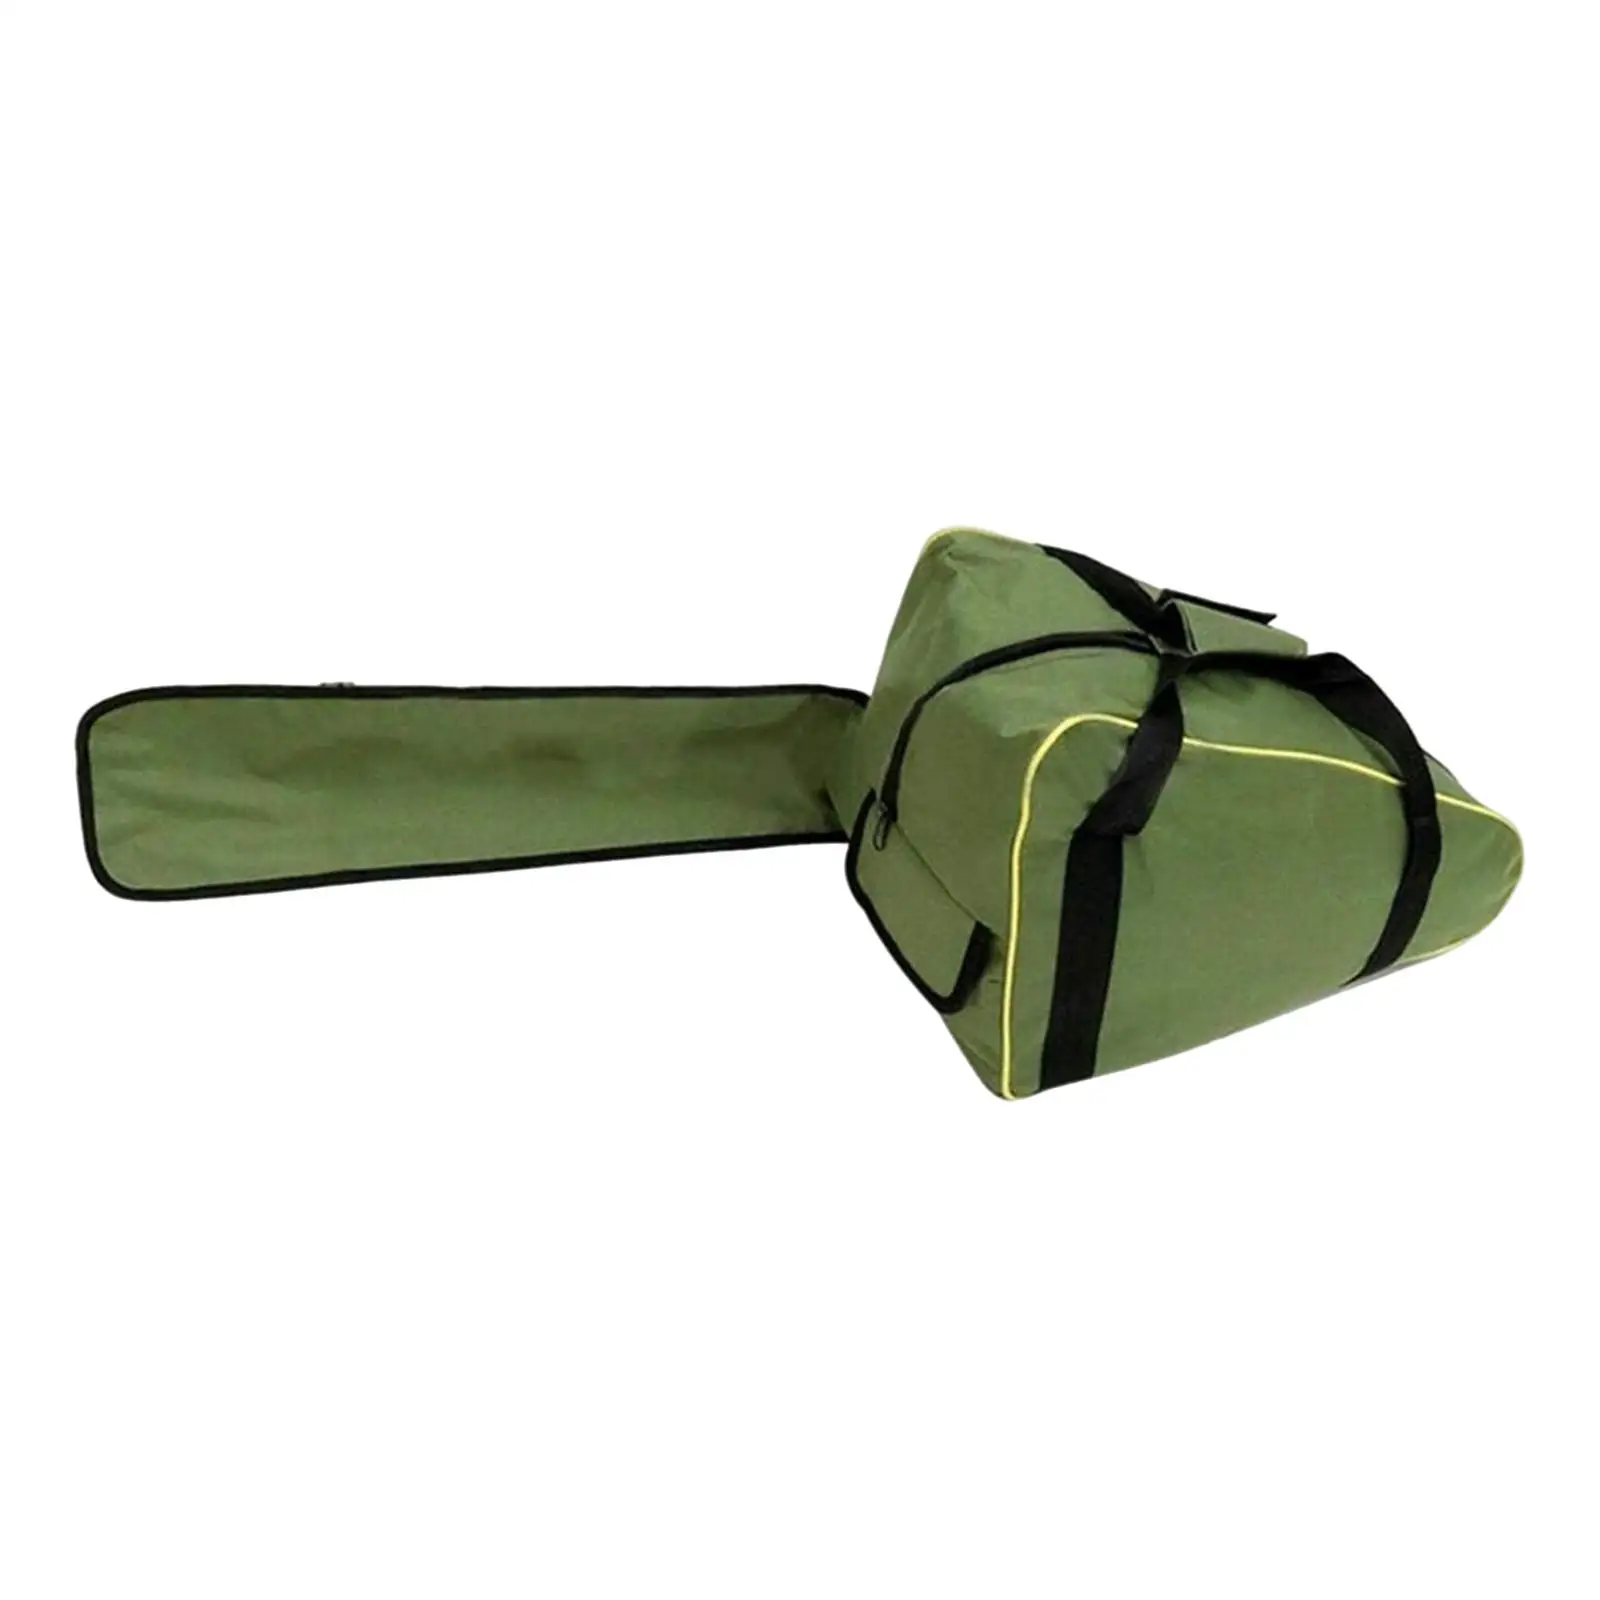 Portable Chainsaw Stand Bag Durable Outside Rainproof Handbag Chainsaw Chain Case